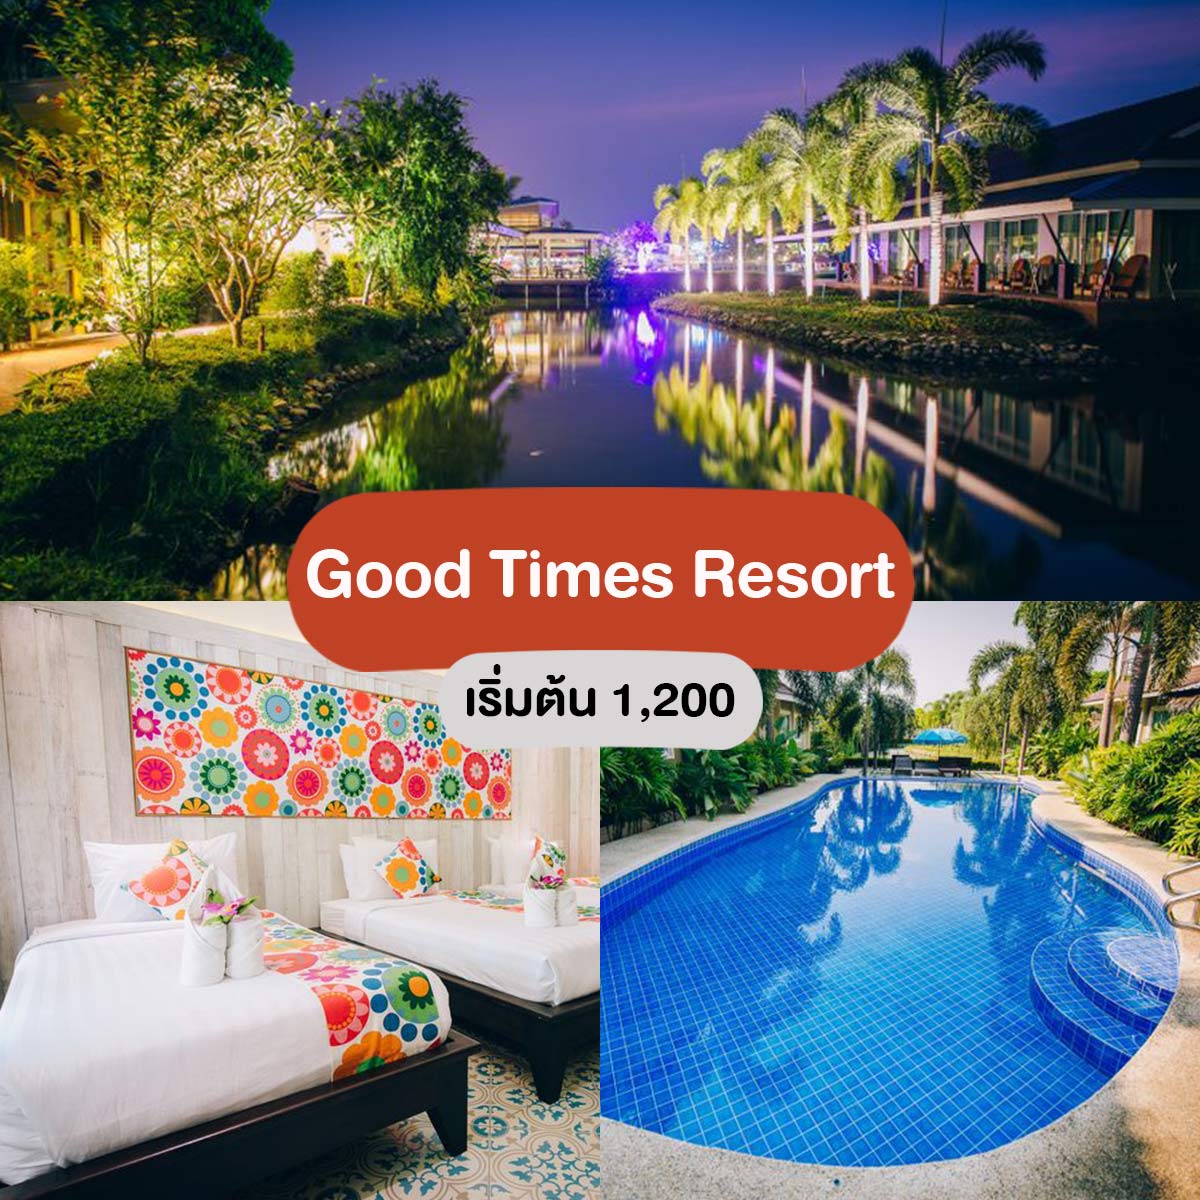 Good Times Resort